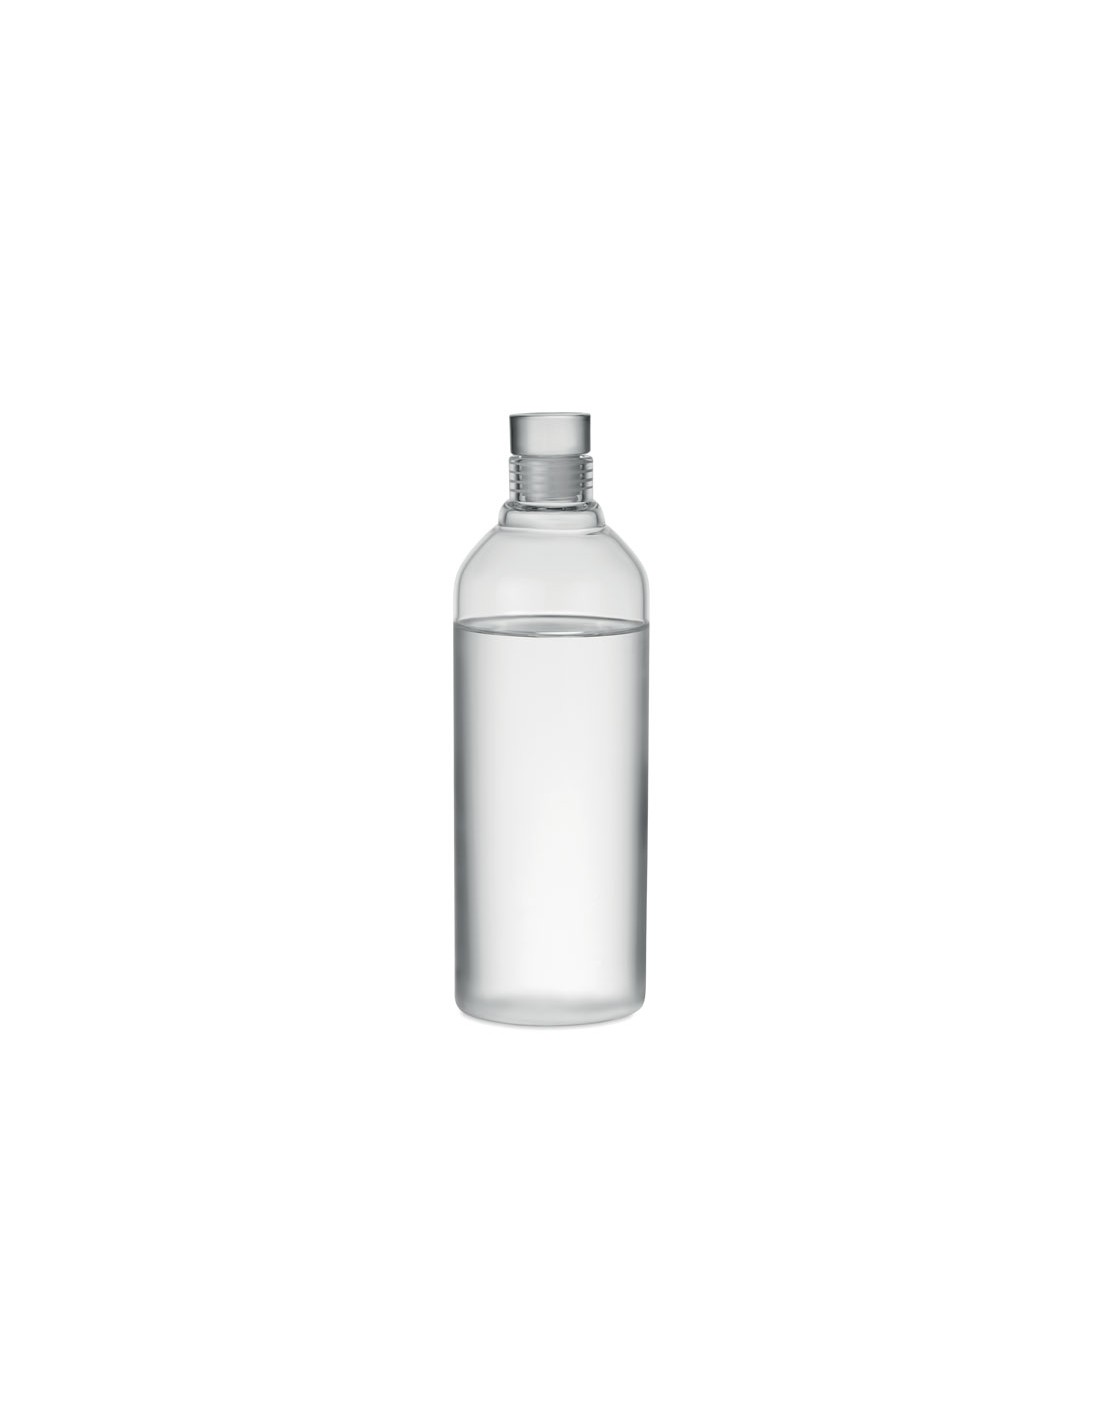 Botellas de vidrio de borosilicato 1 L